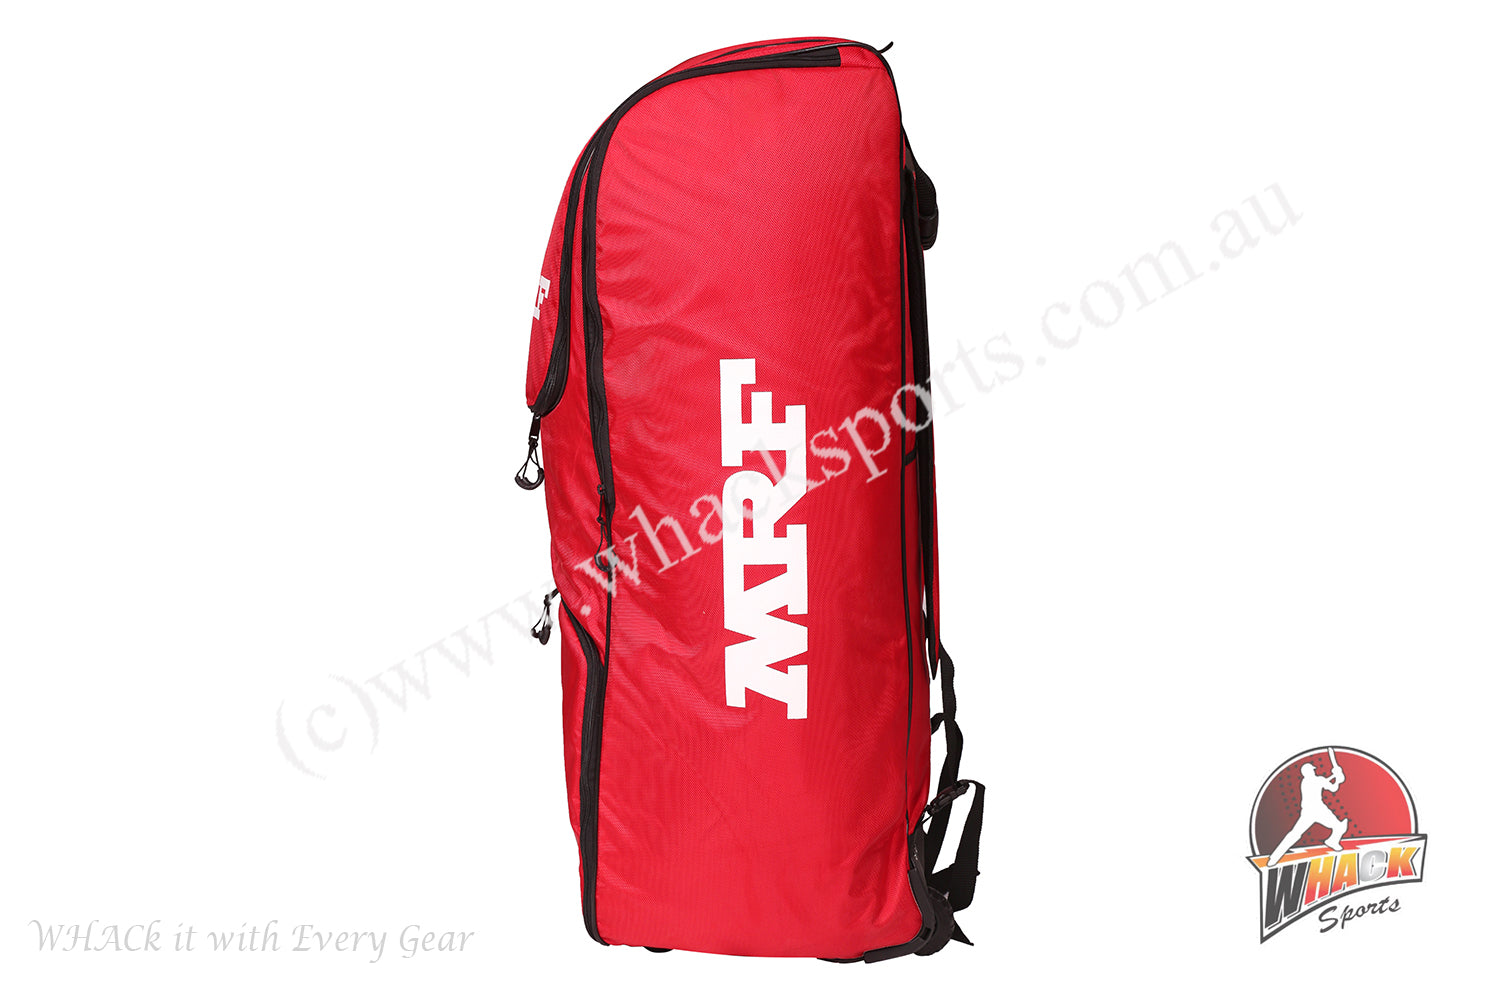 MRF Genius Grand Virat Kohli 18 Duffle Kit Bag with Wheels -SIZE HARROW  JUNIOR | eBay